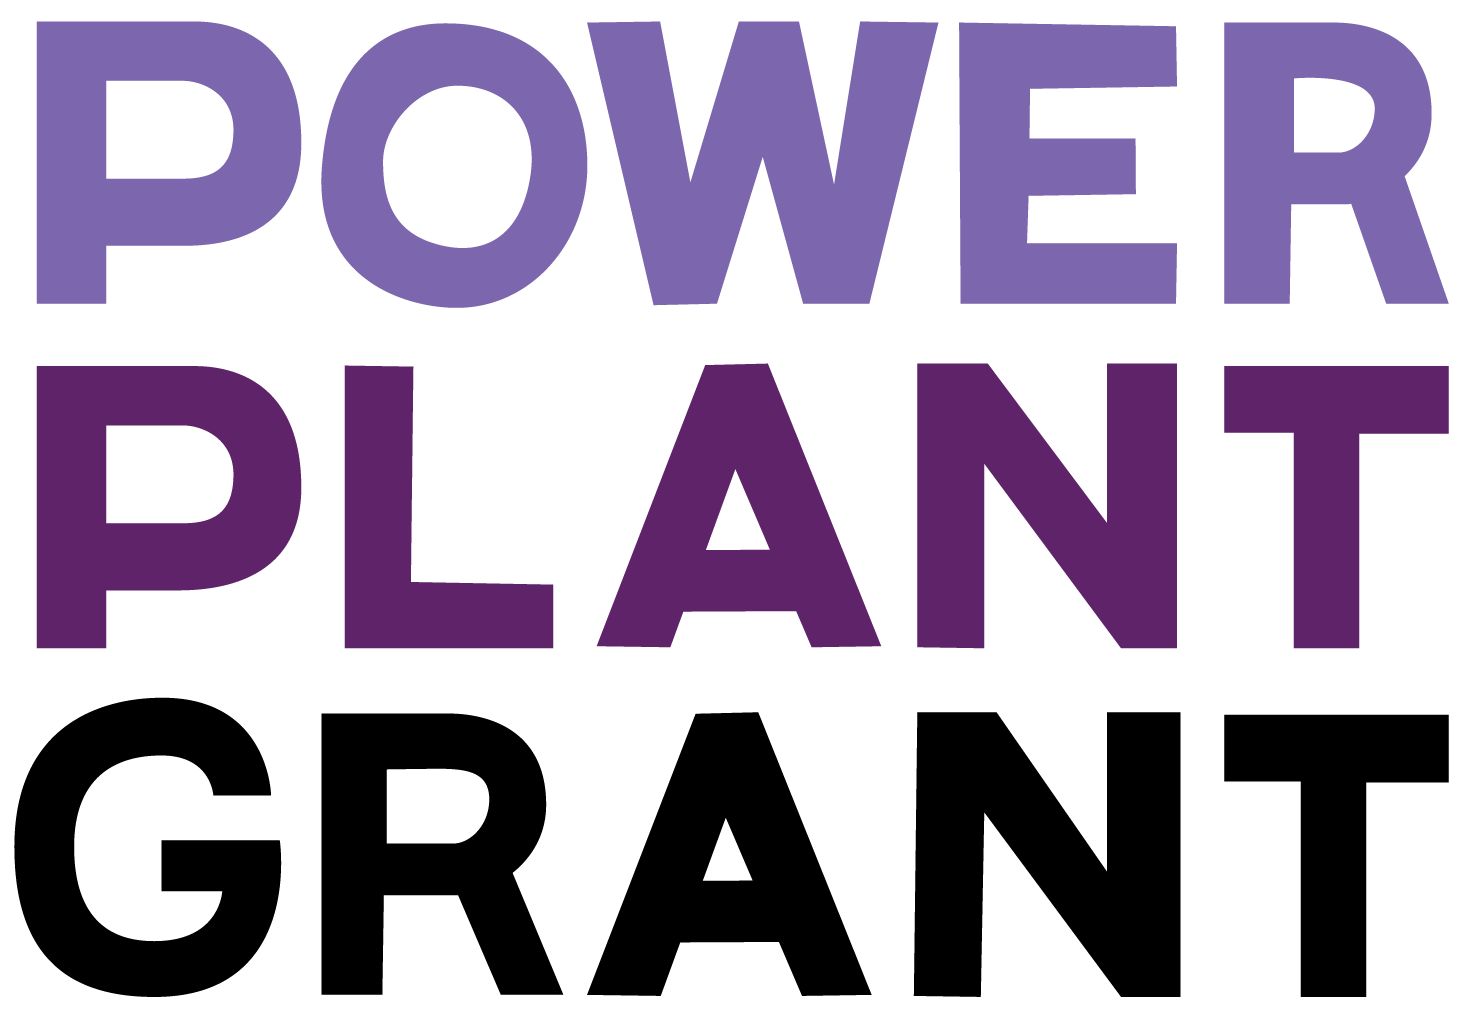 Power Plant Grant